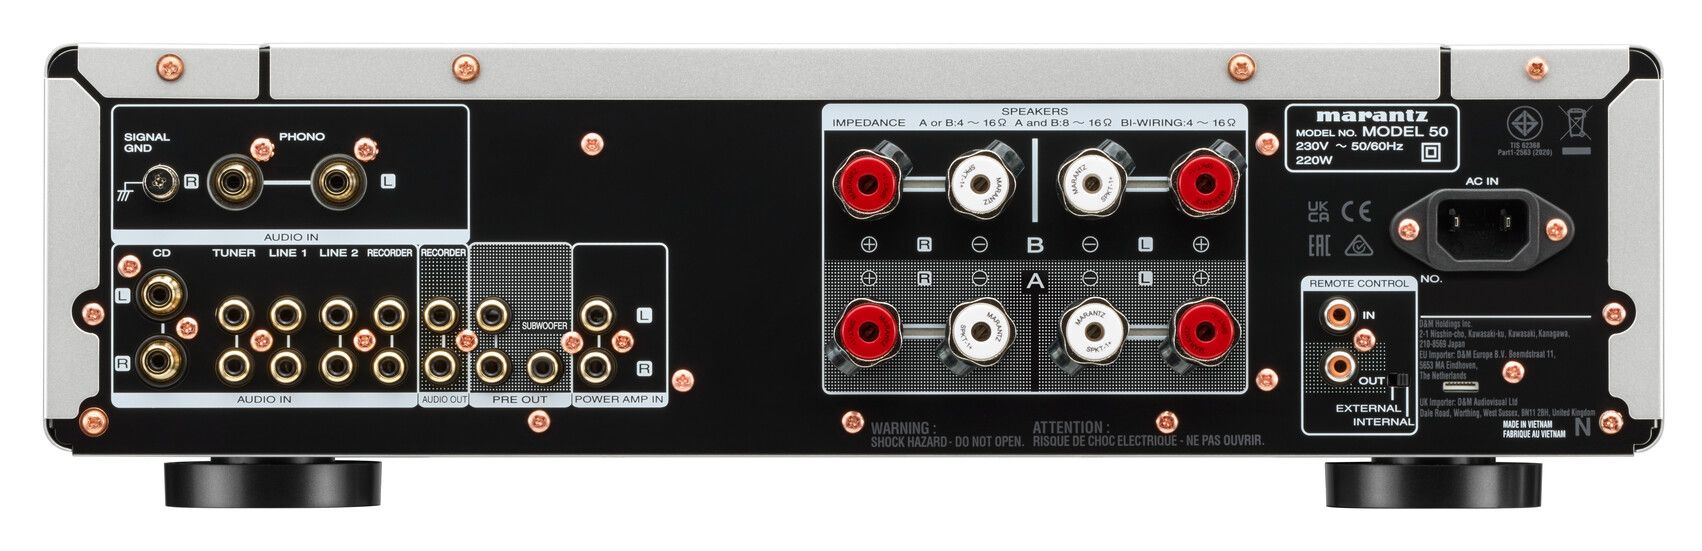 Marantz model 50 nero amplificatore integrato 2x70 watt